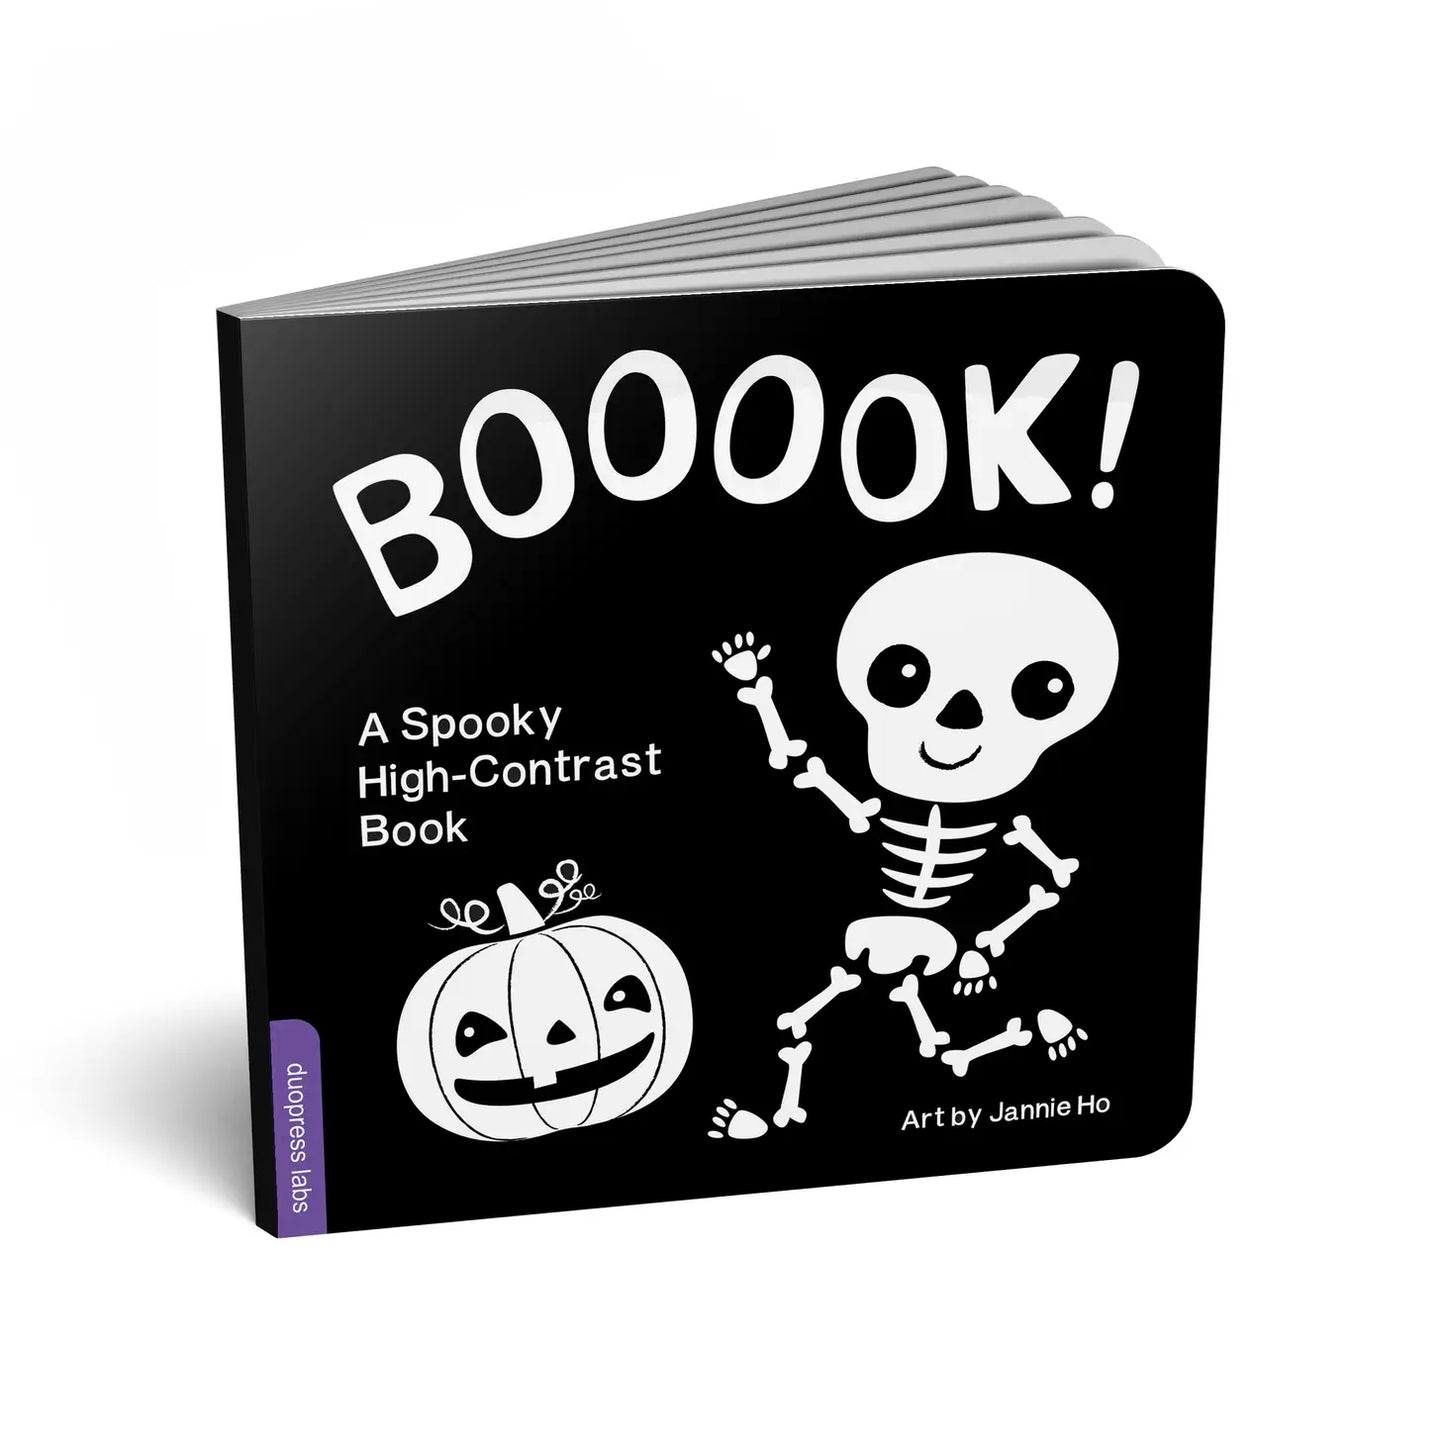 Booook! A Spooky High-Contrast Book